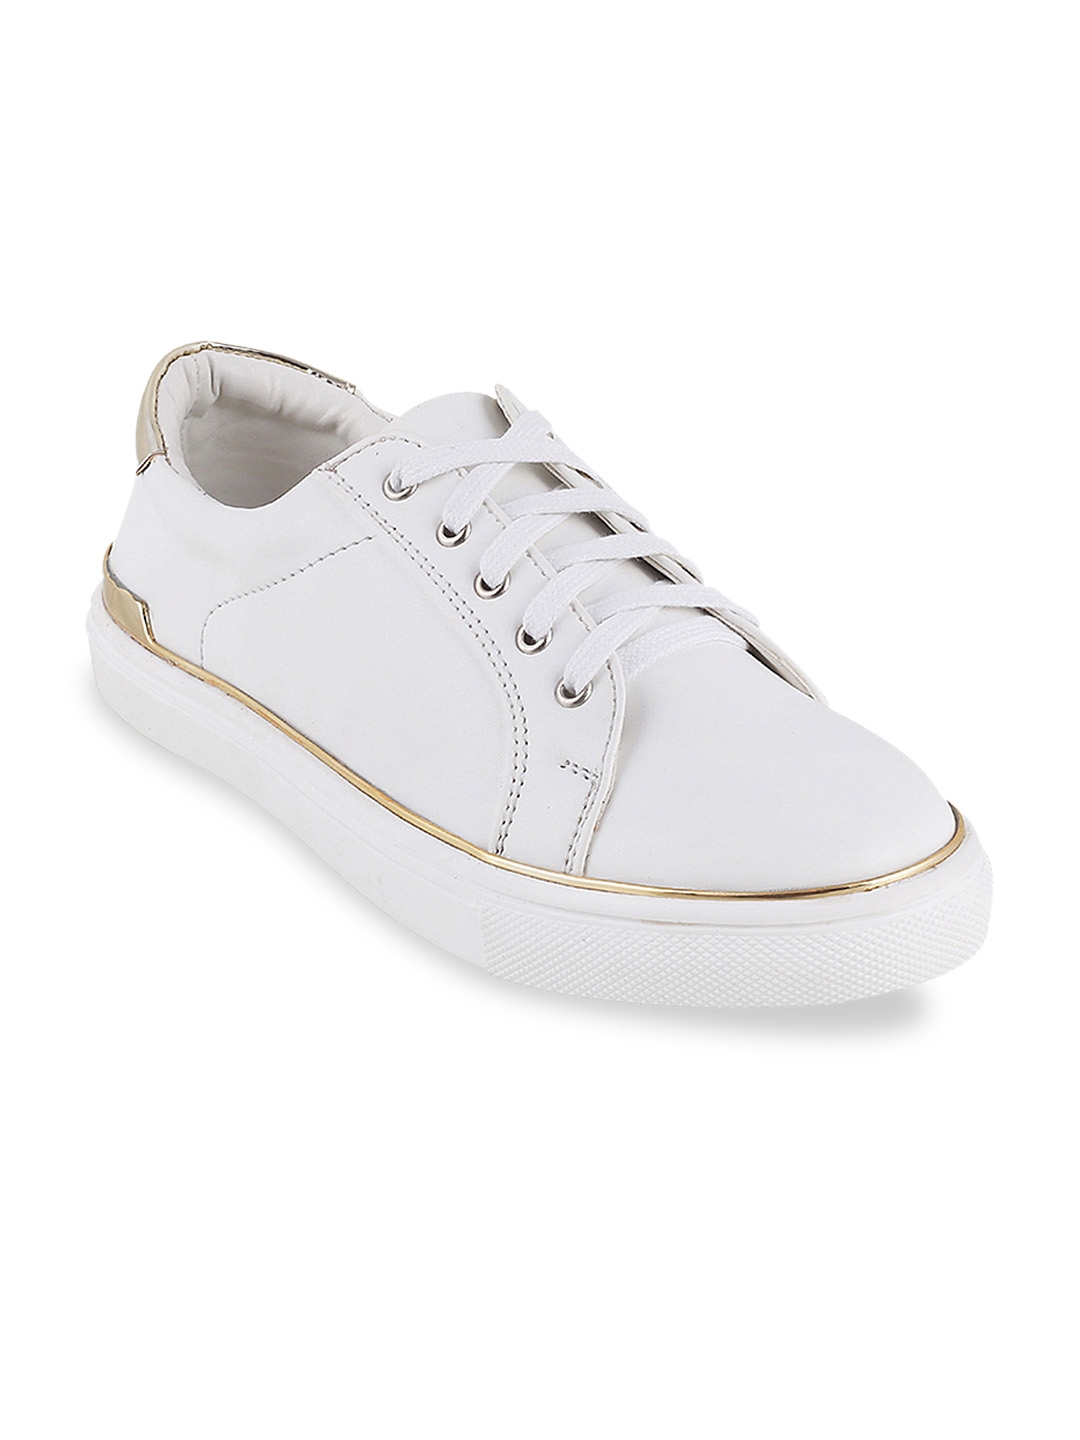 Buy Metro Women White Sneakers - Casual Shoes for Women 7239225 | Myntra